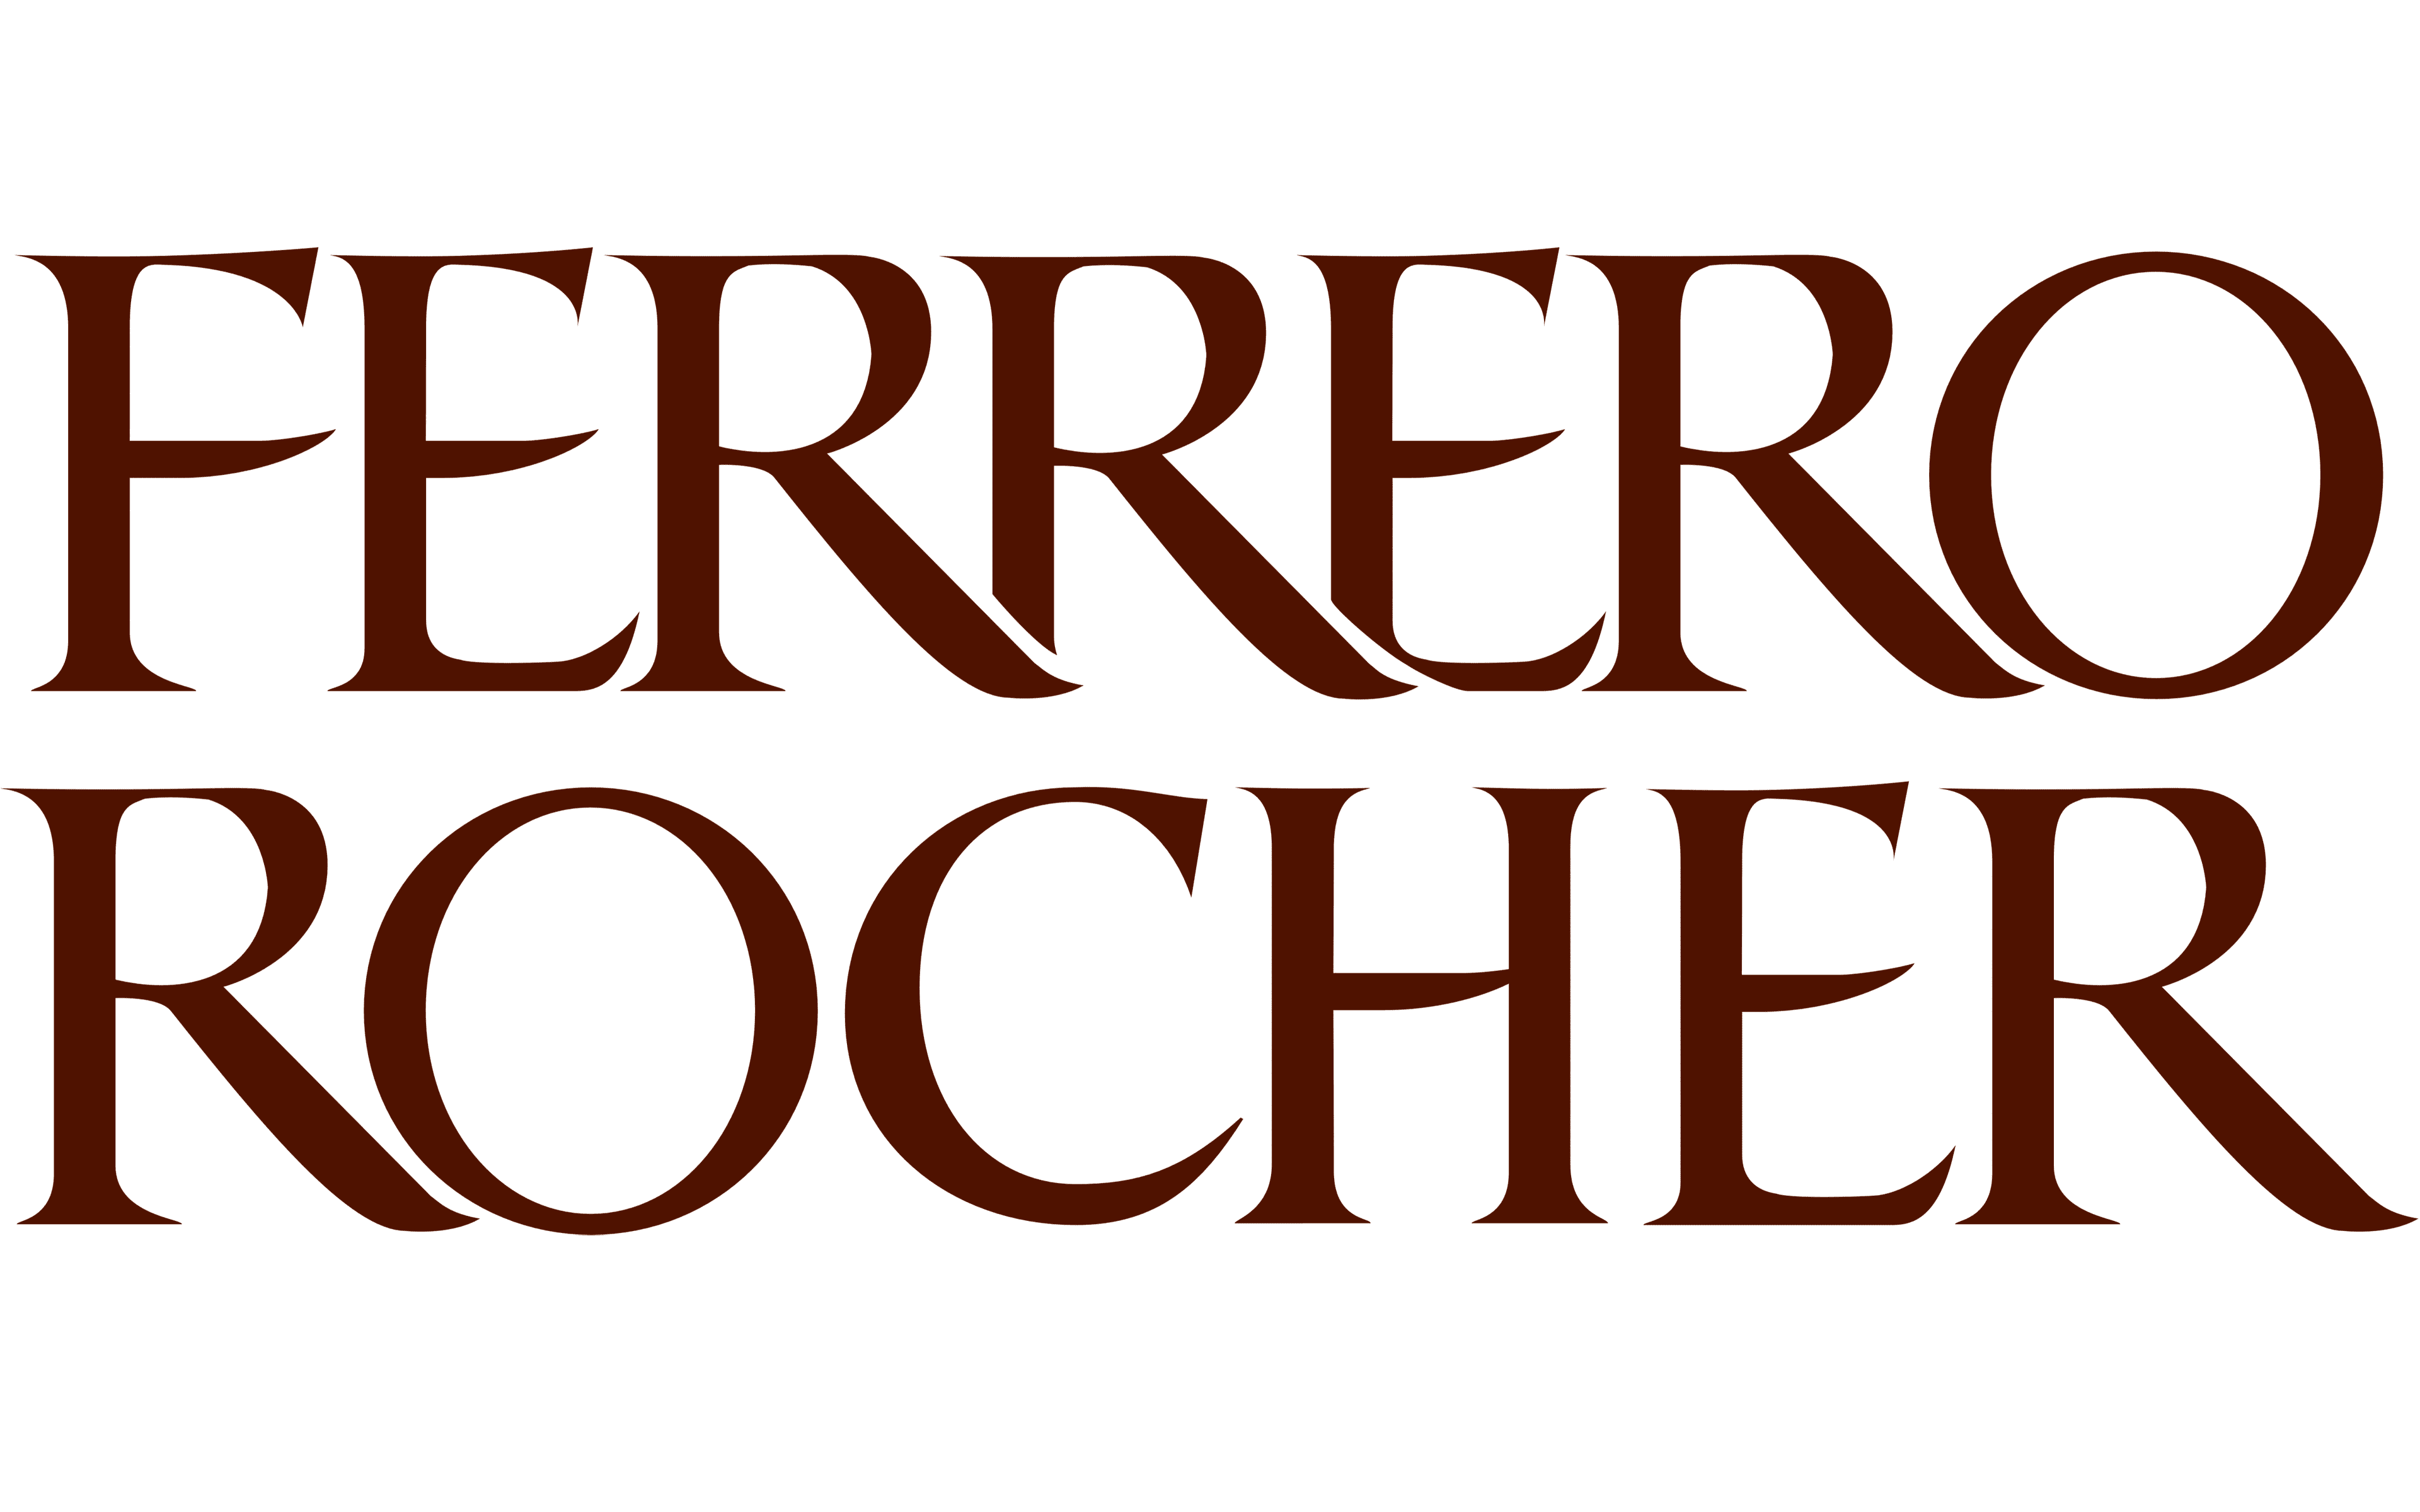 The History of Ferrero Rocher 